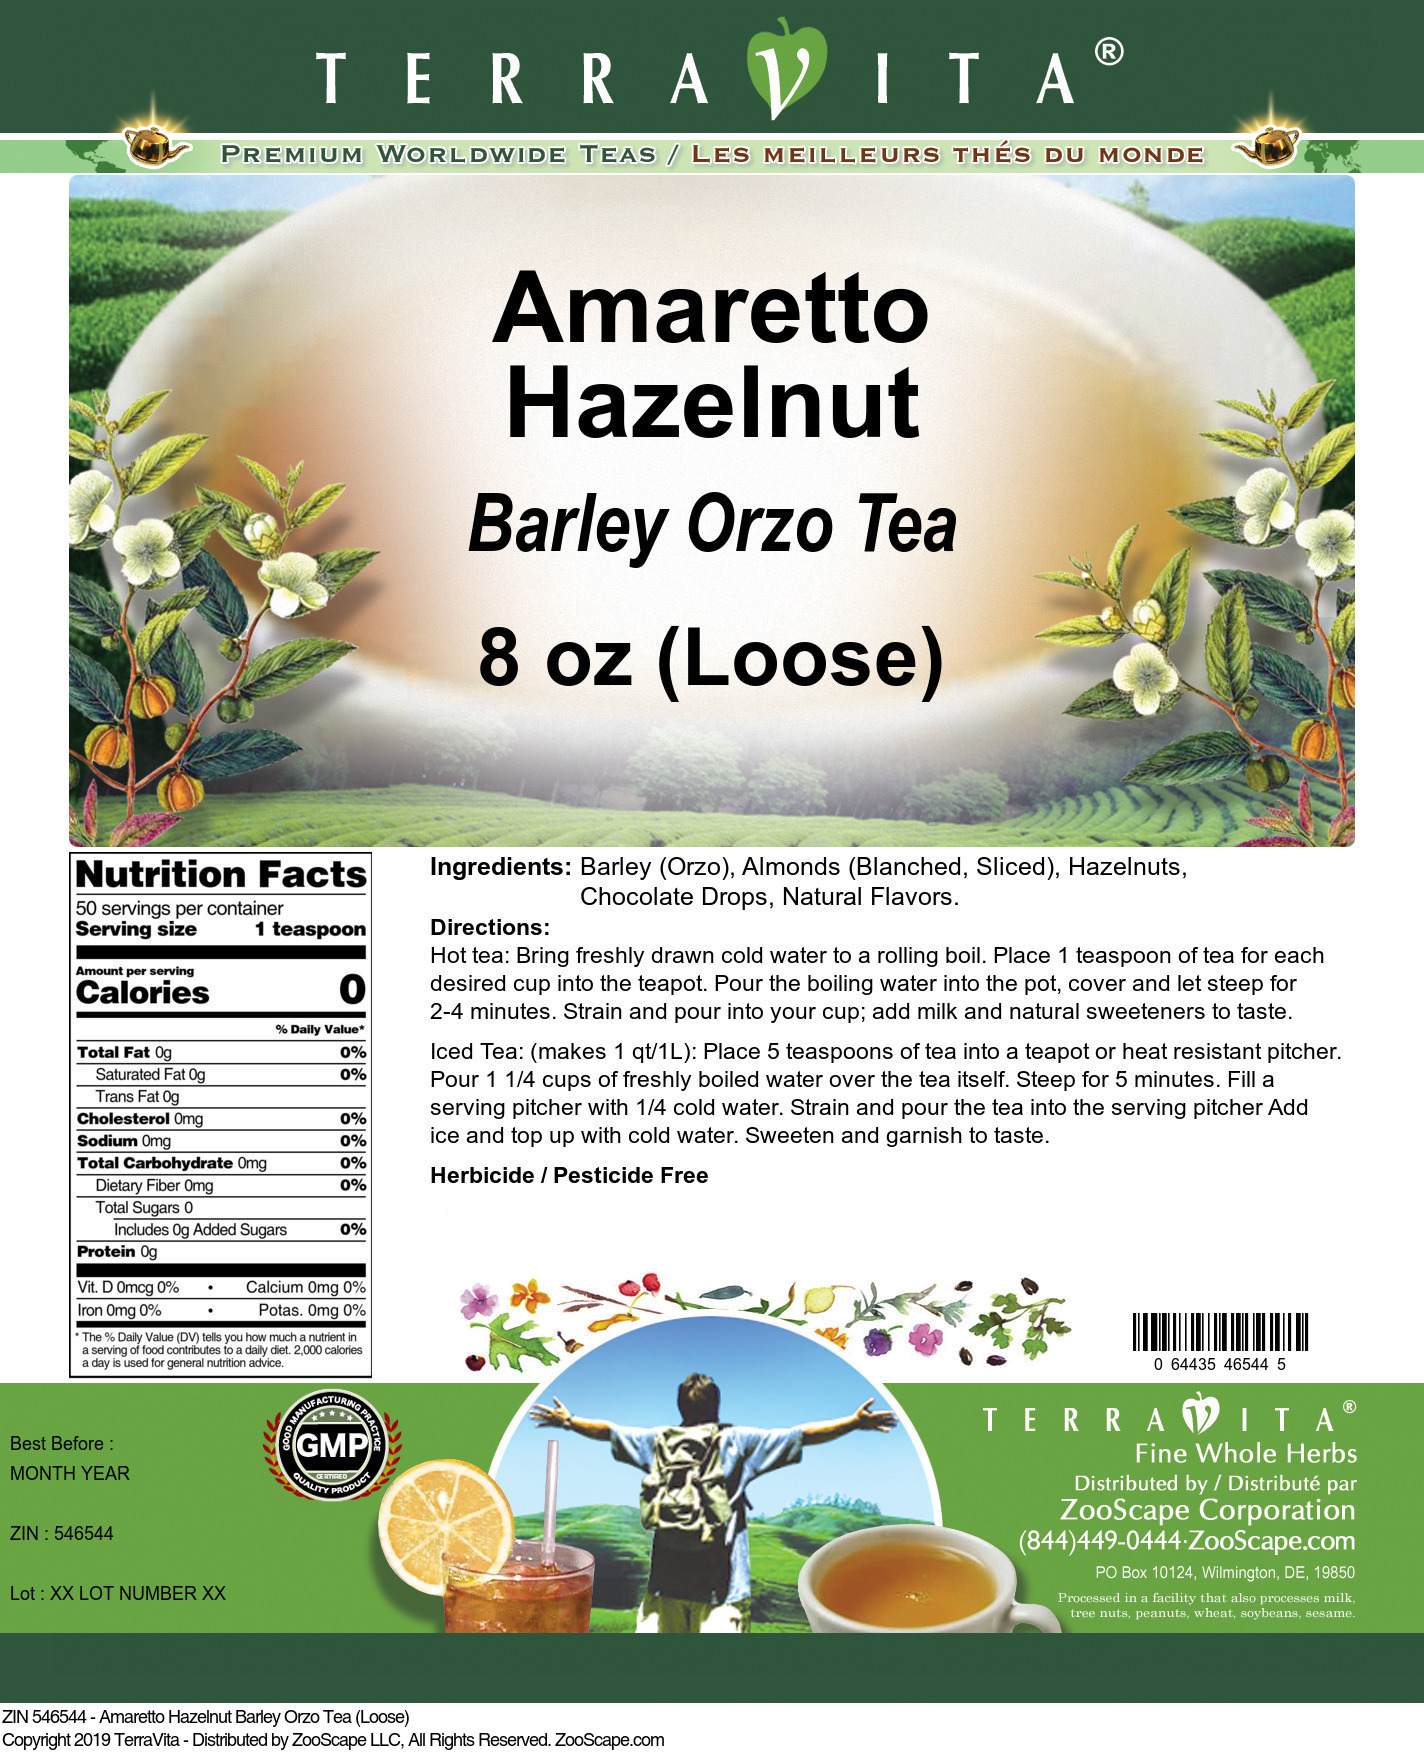 Amaretto Hazelnut Barley Orzo Tea (Loose) - Label